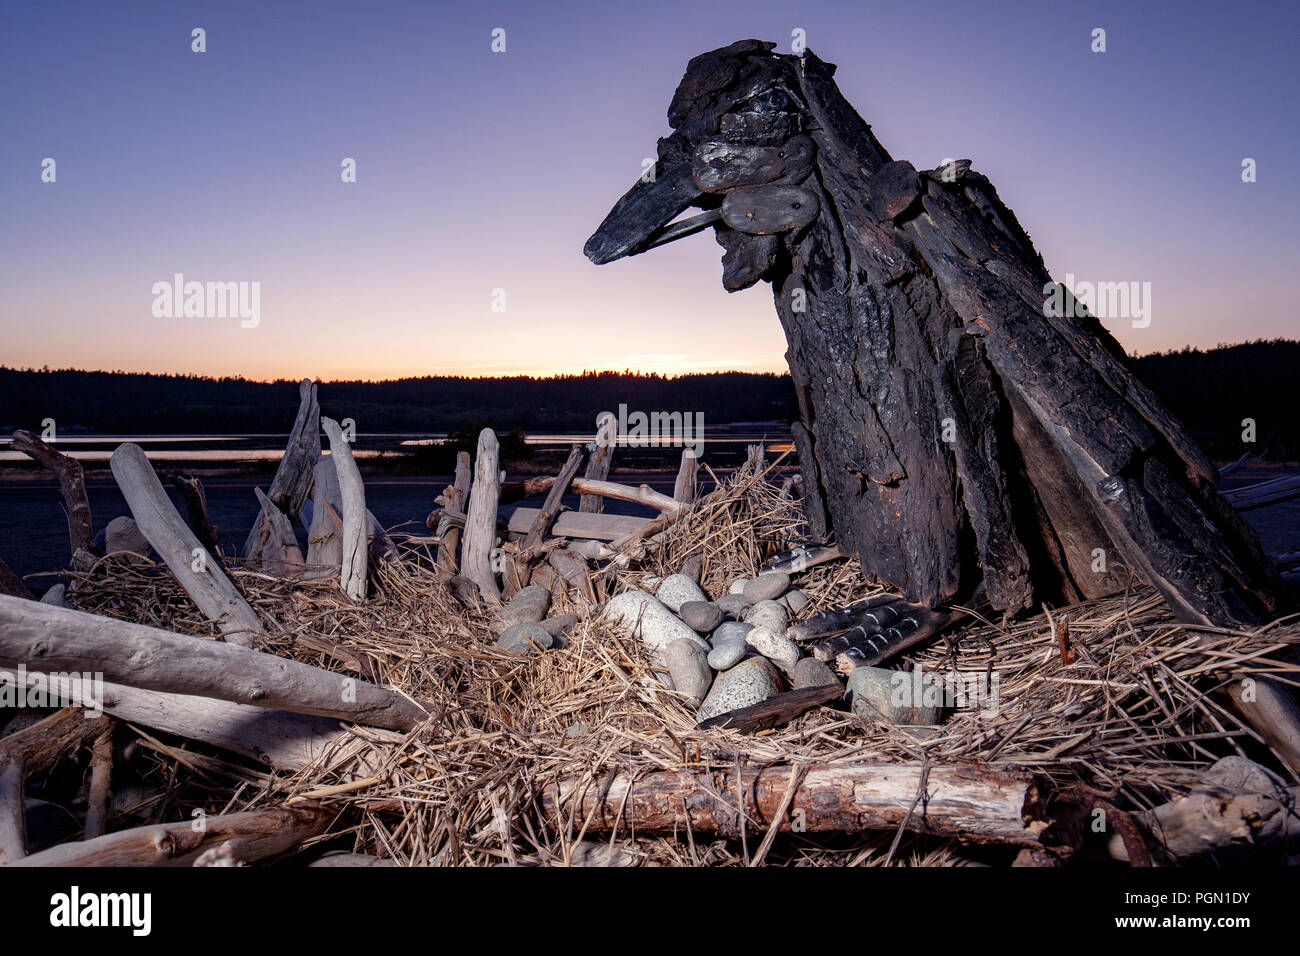 Raven - Driftwood Kunst von Paul Lewis - esquimalt Lagune, Victoria, Vancouver Island, British Columbia, Kanada Stockfoto